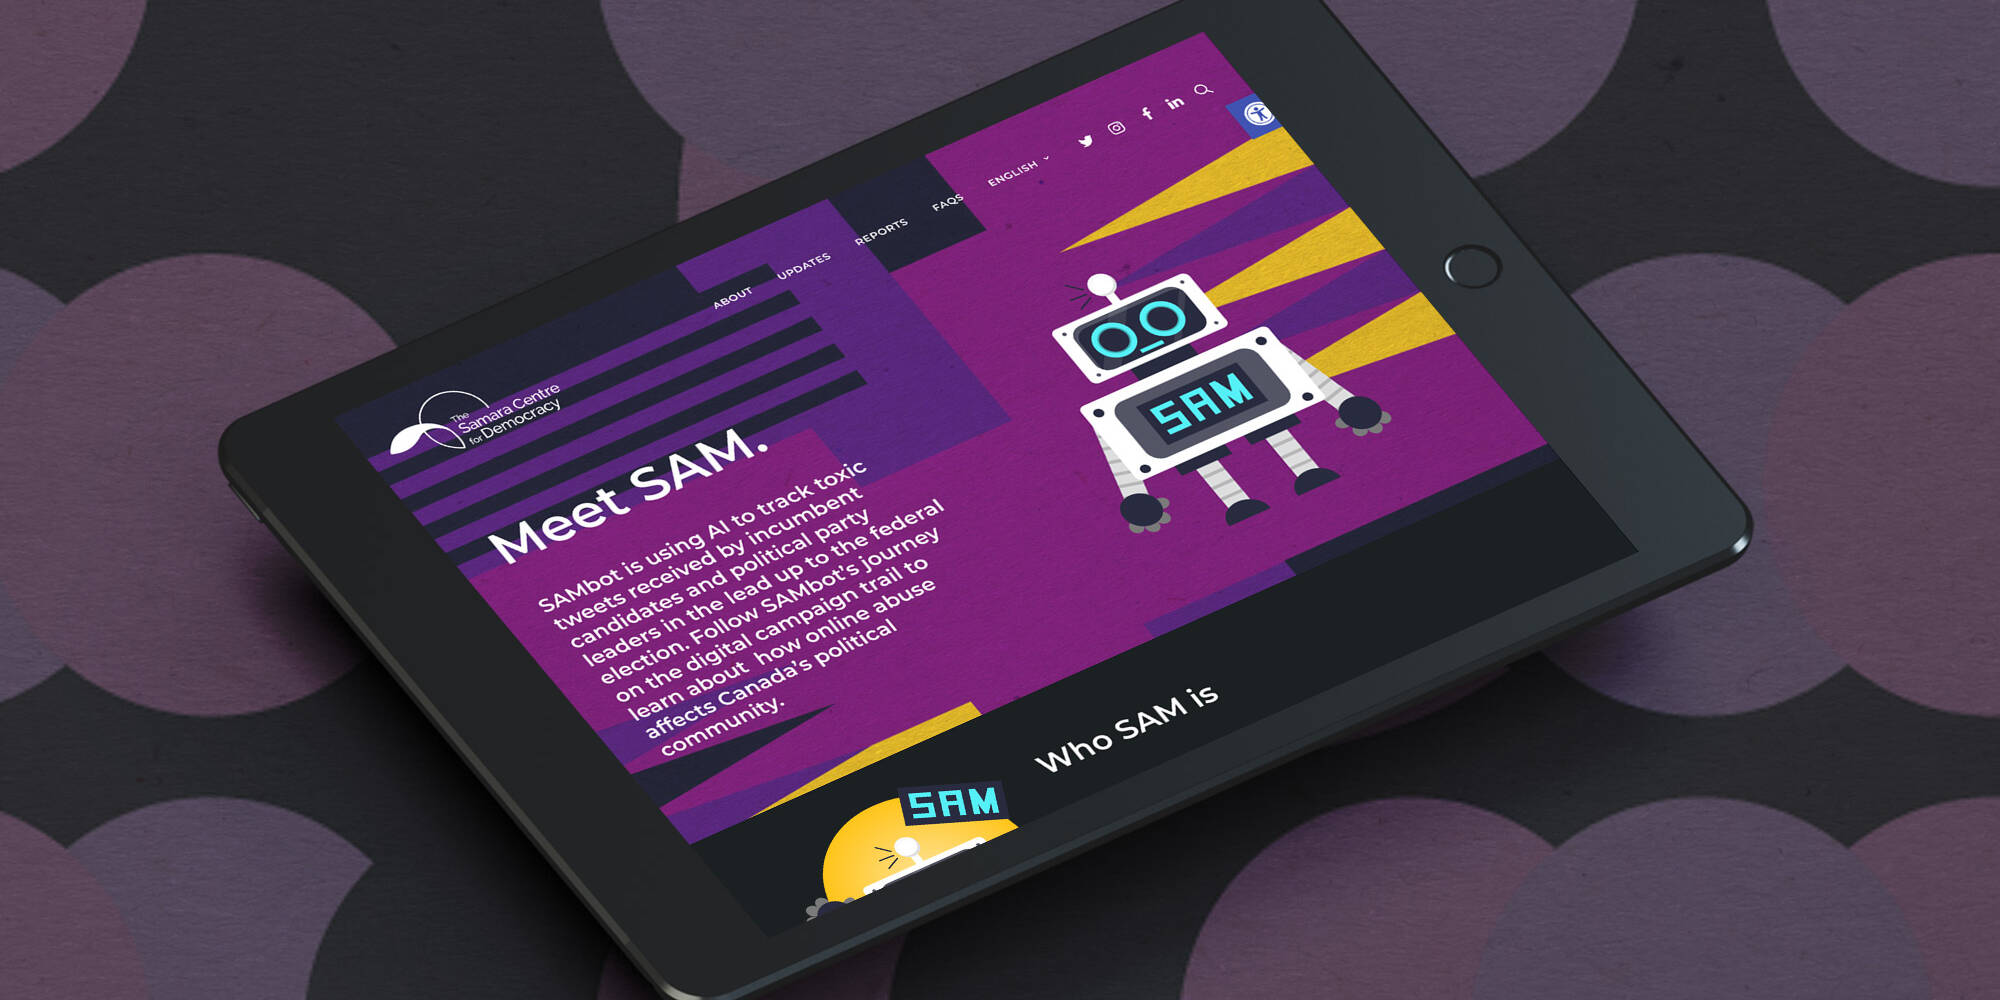 Samara-sambot-website-design-toronto-website-designer-developer-freelance